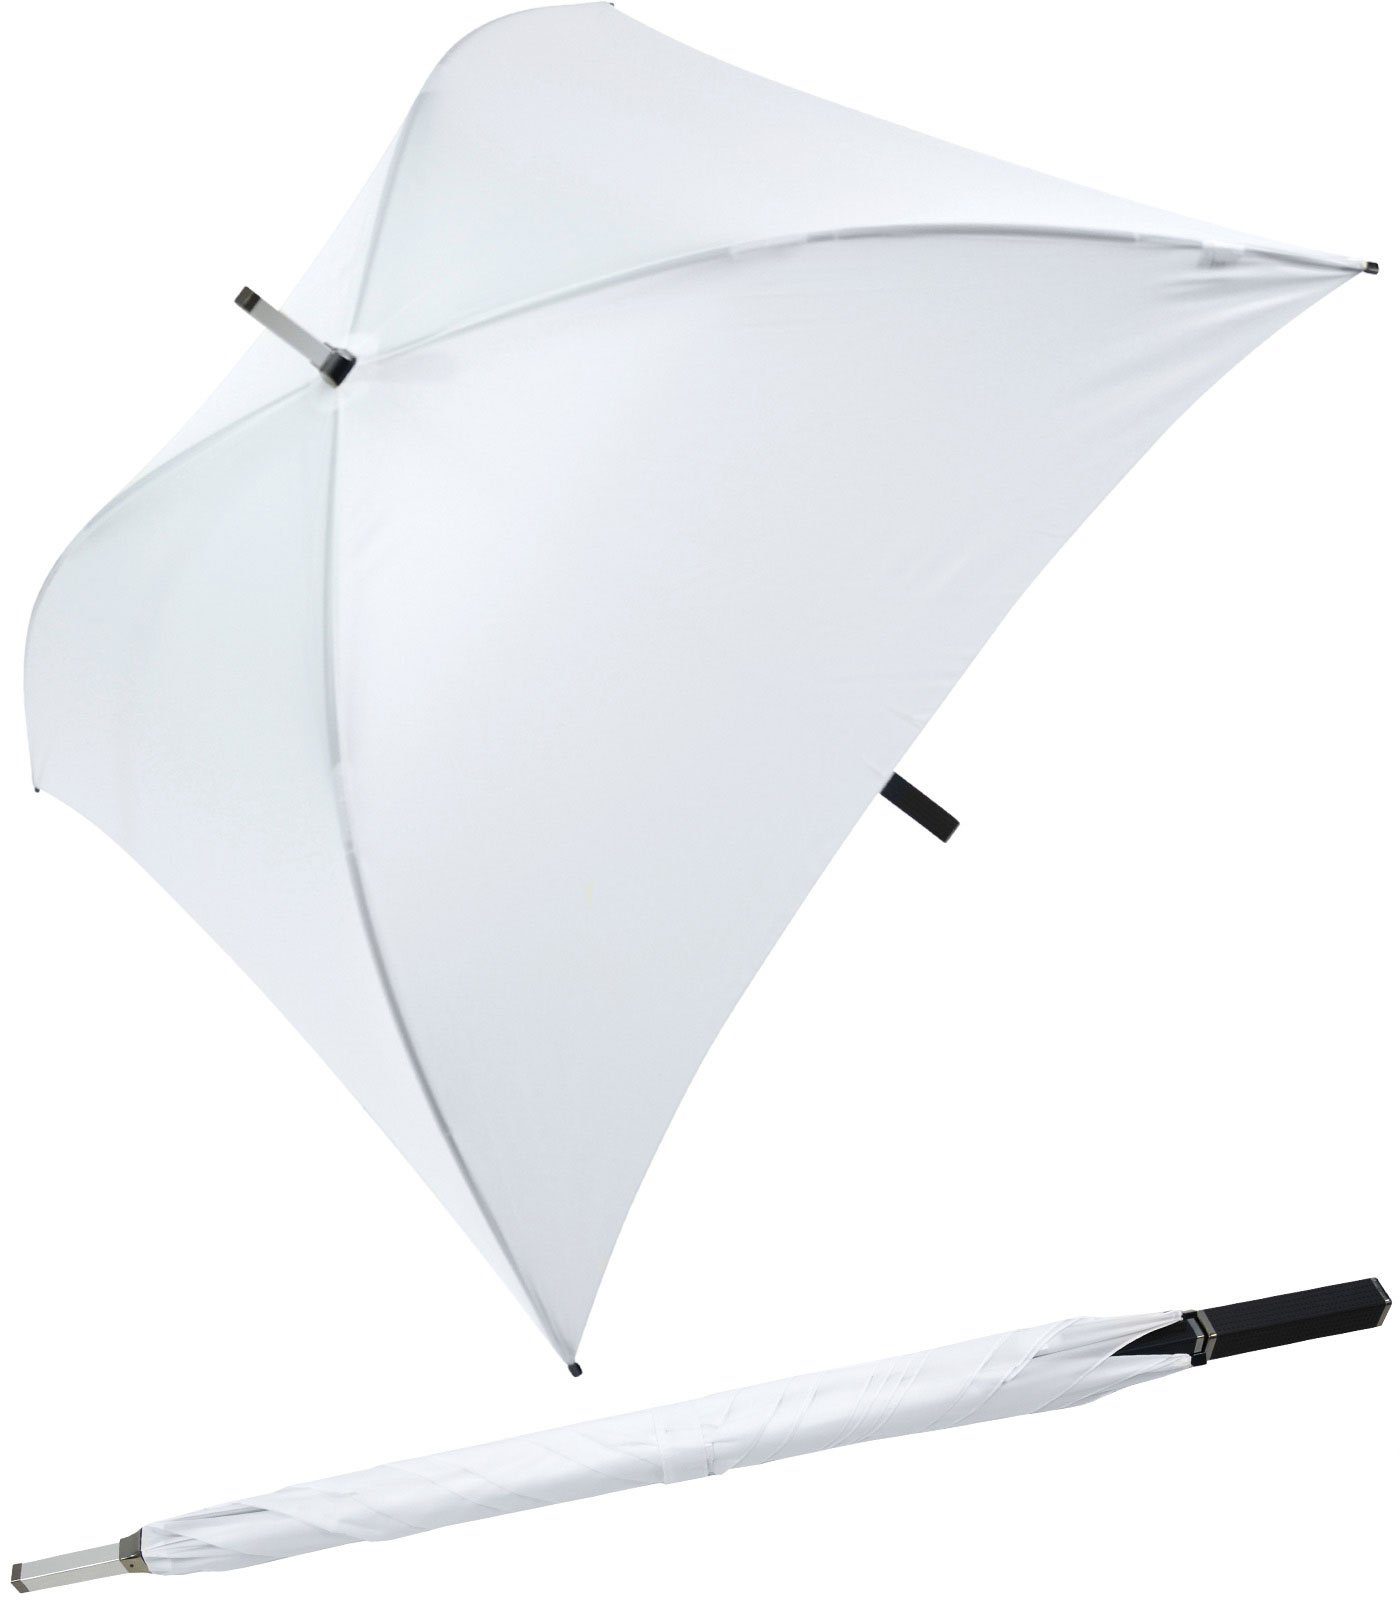 preisorientiert Impliva Langregenschirm All Square® ganz quadratischer Regenschirm Regenschirm, voll der besondere weiß